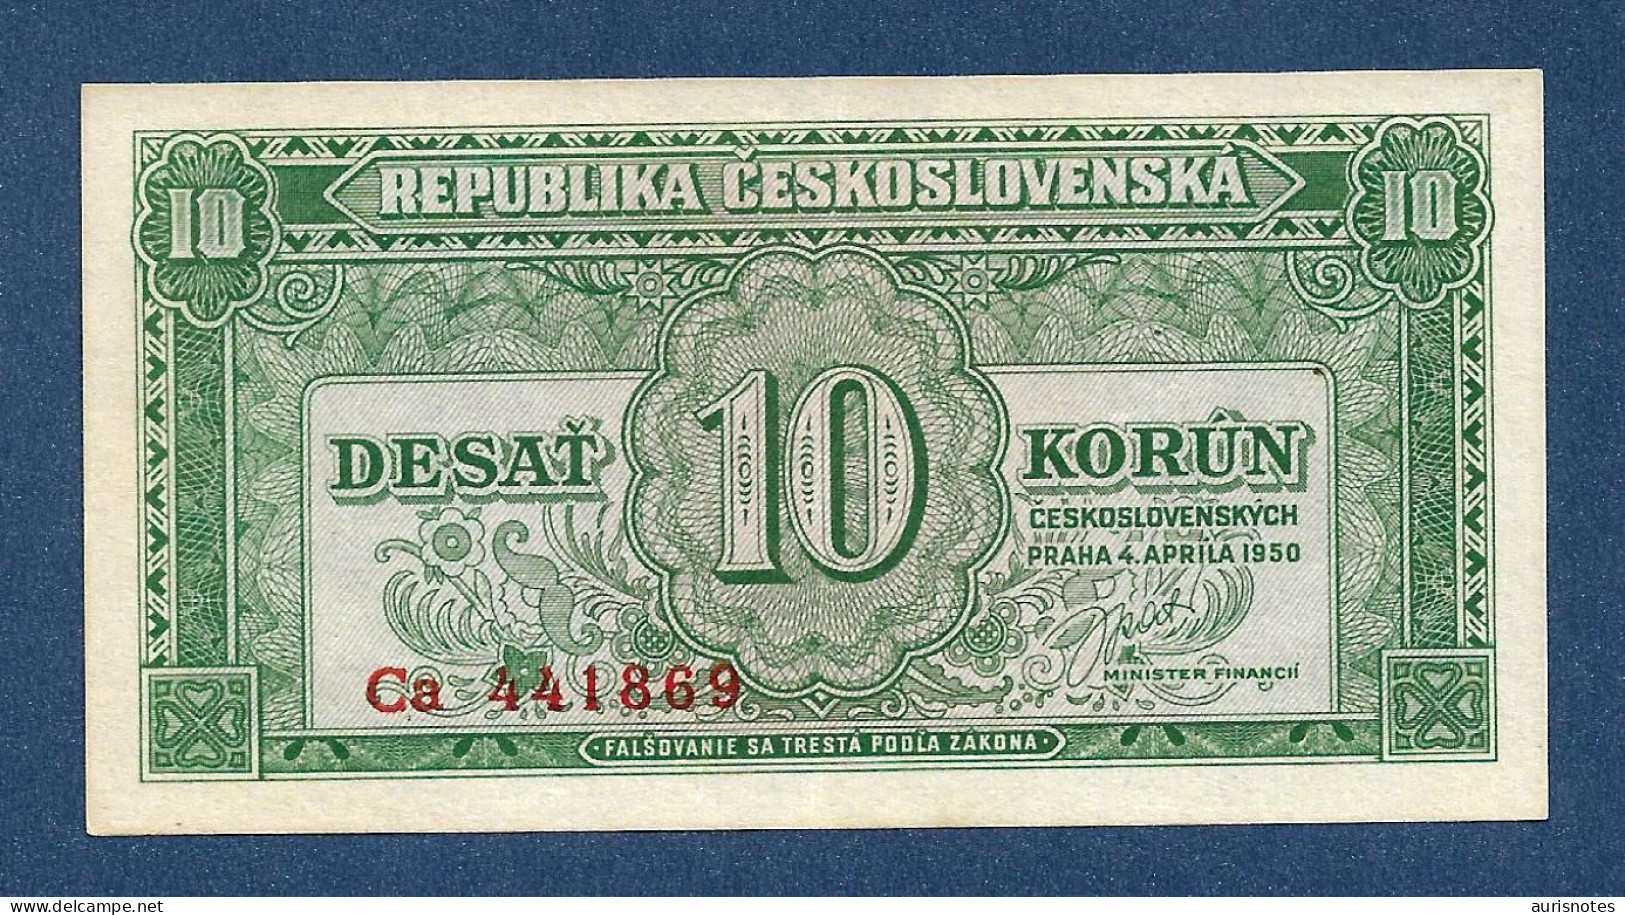 Czechoslovakia 10 Korun 1950 Not Perforated P69a UNC- - Tschechoslowakei